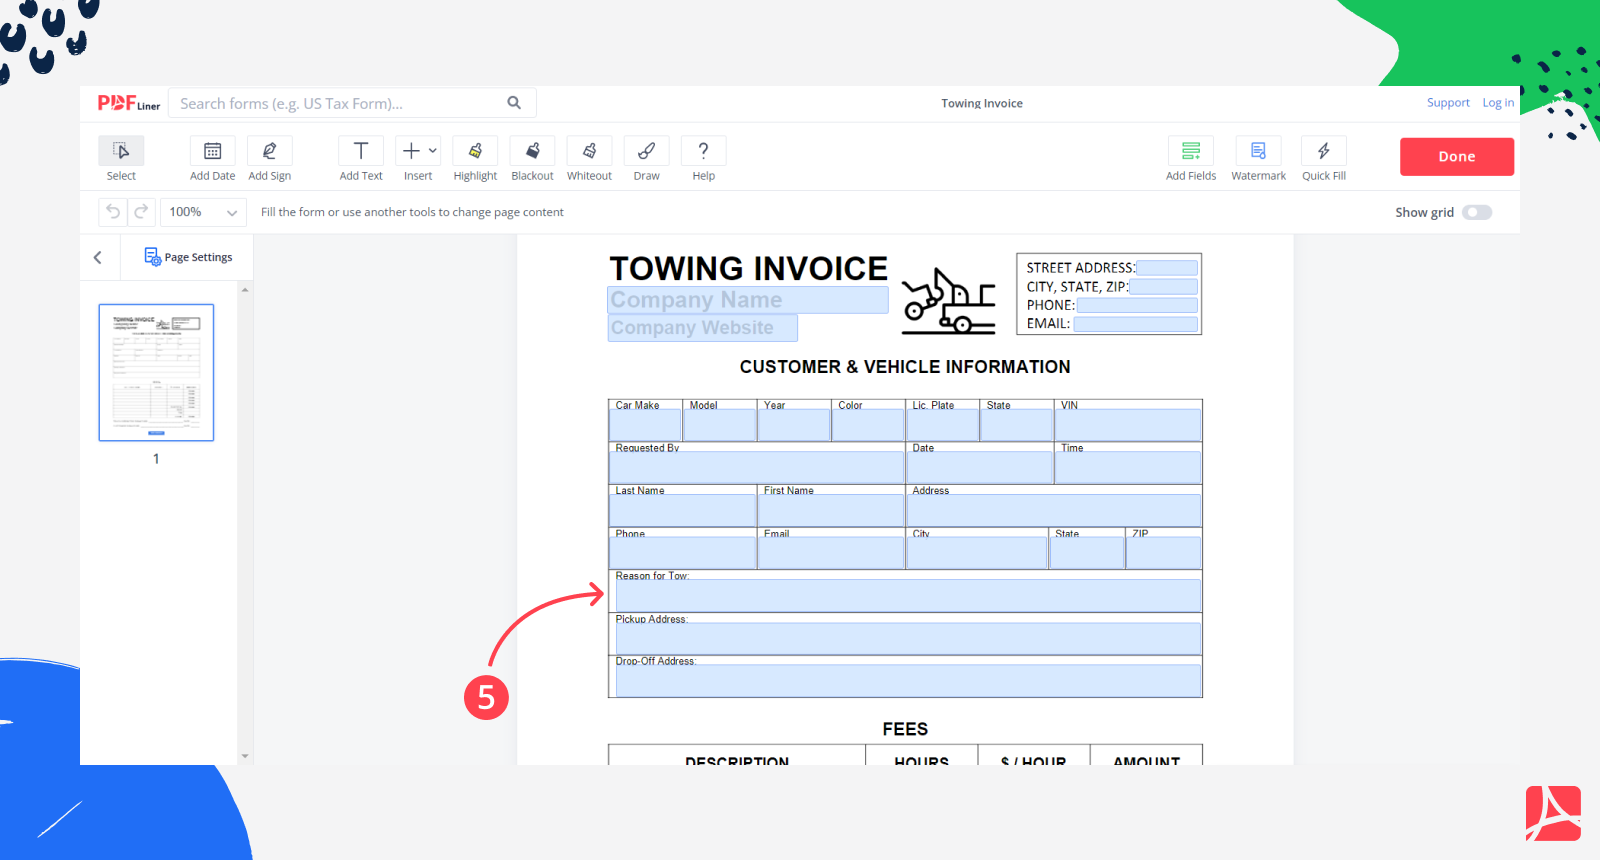 Towing Invoice screenshot step 5